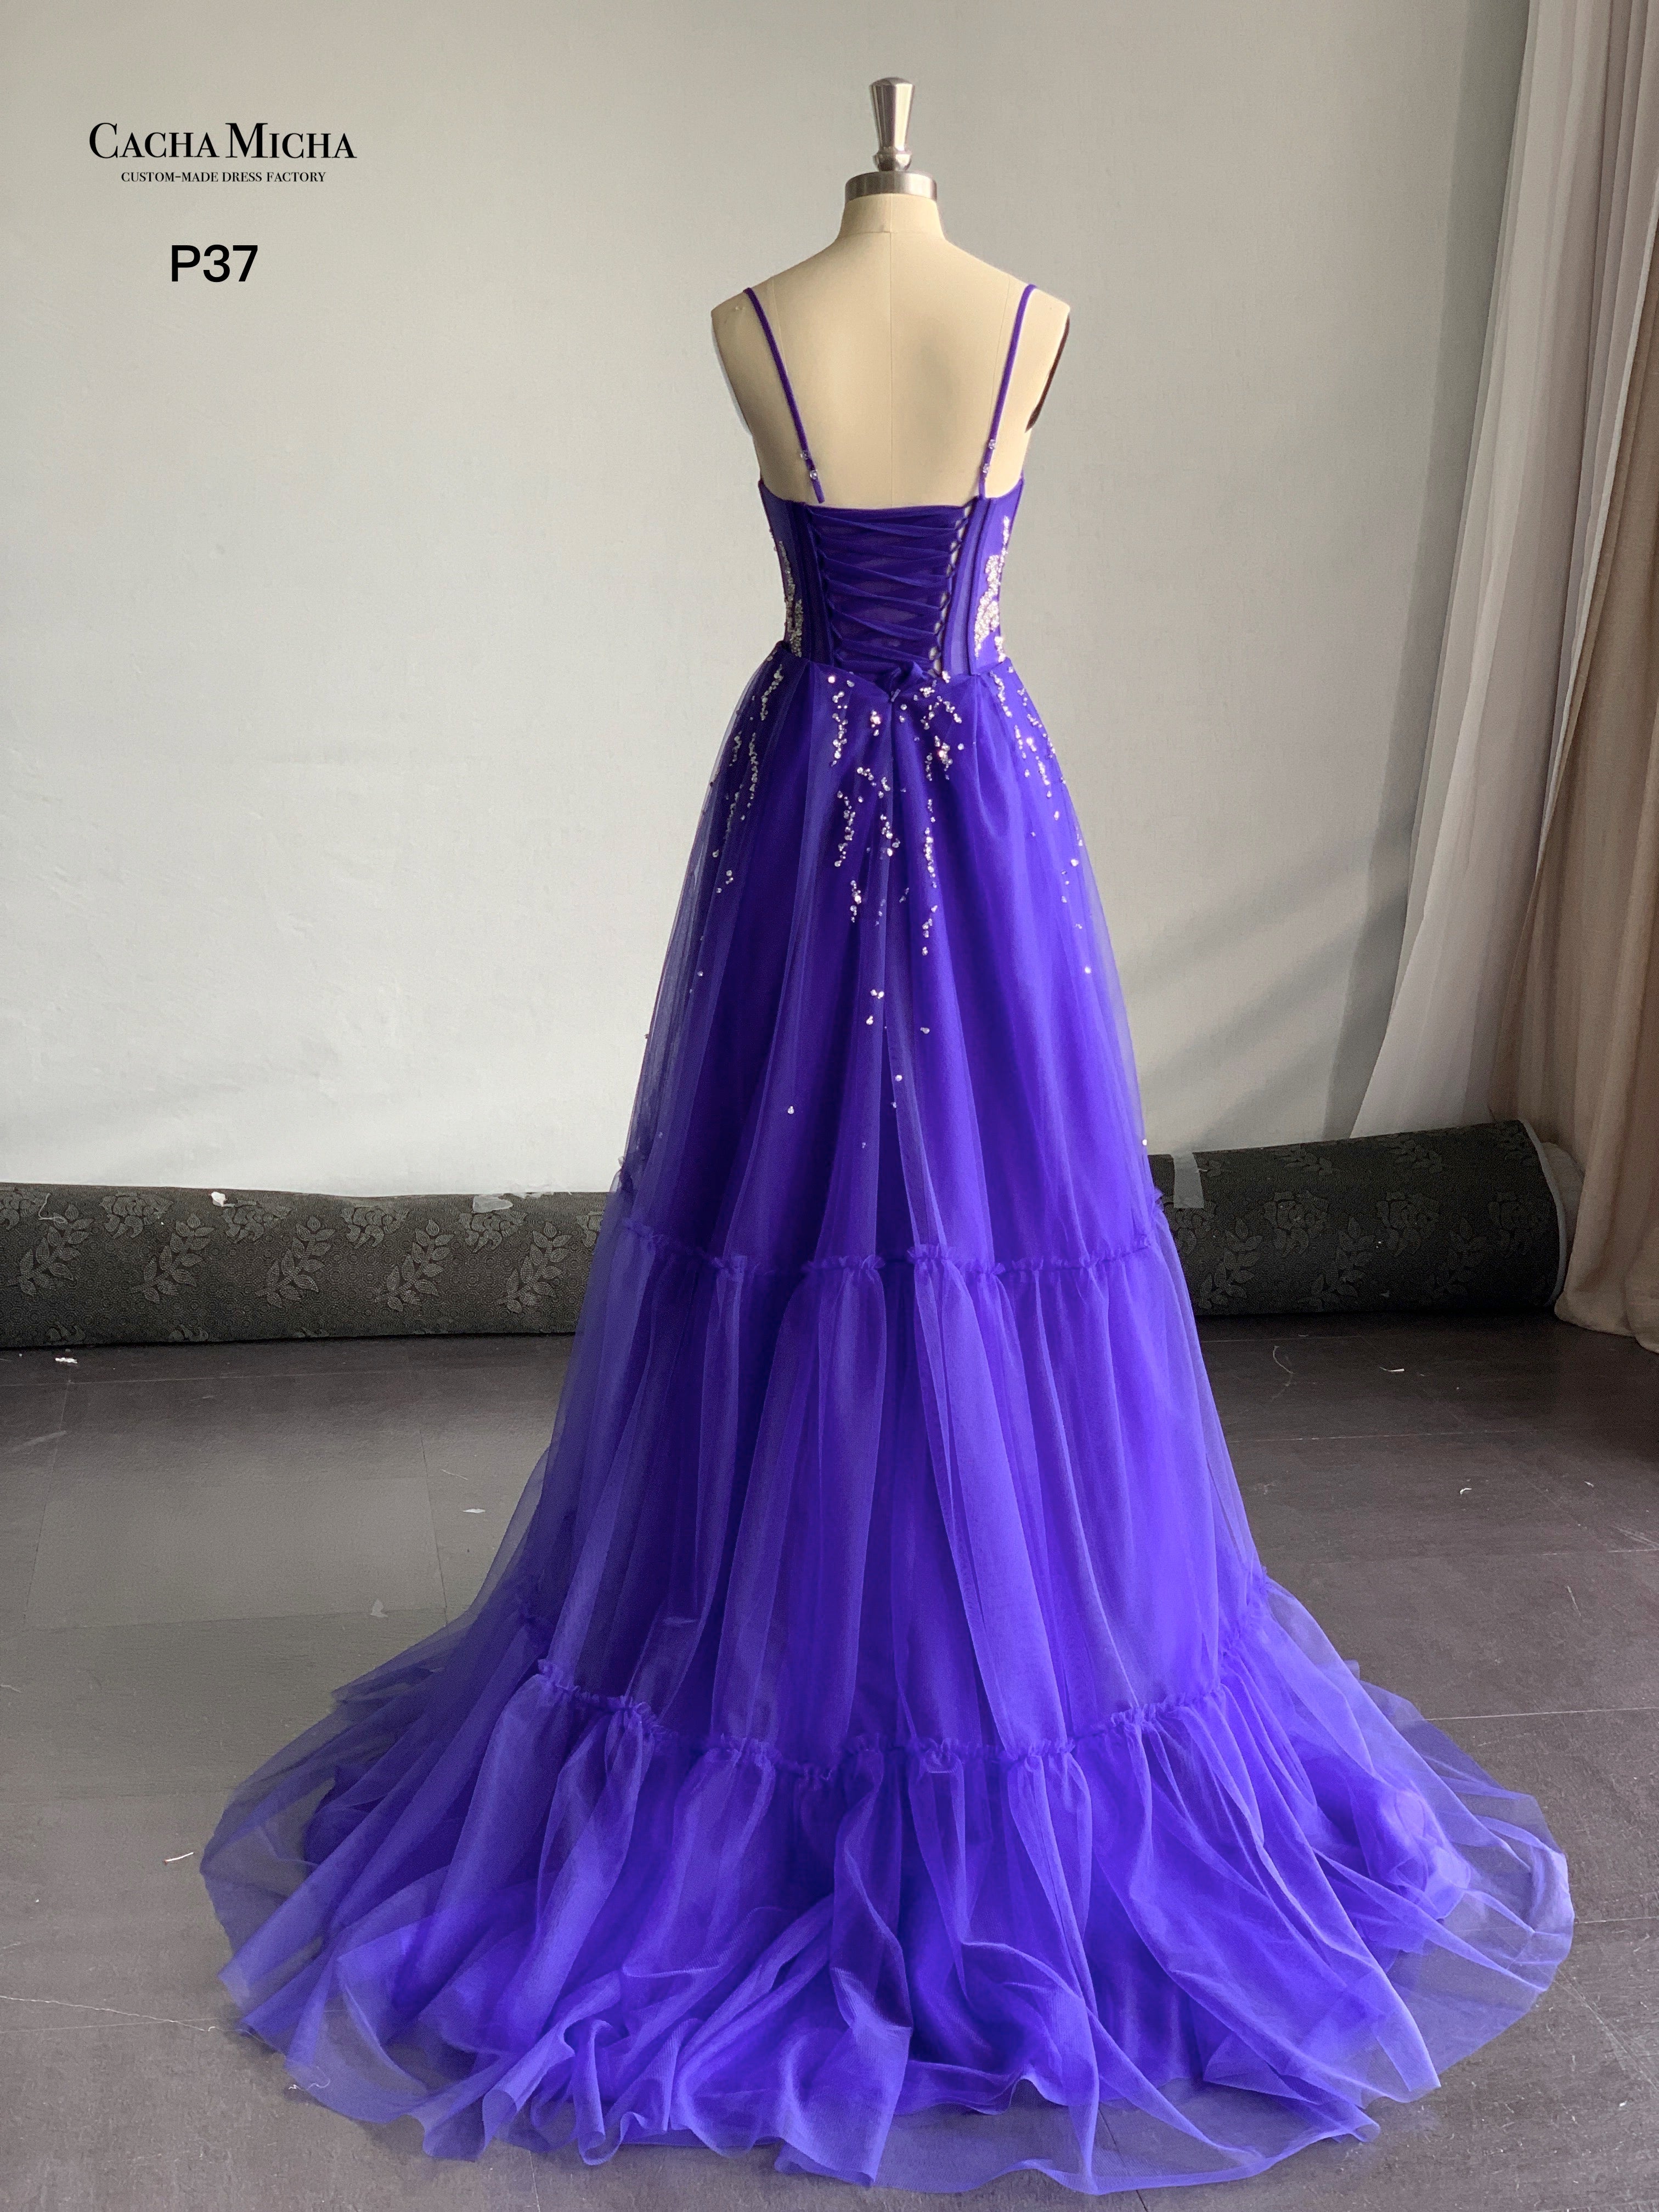 Beautiful Hand Beaded Purple Prom Dress P37